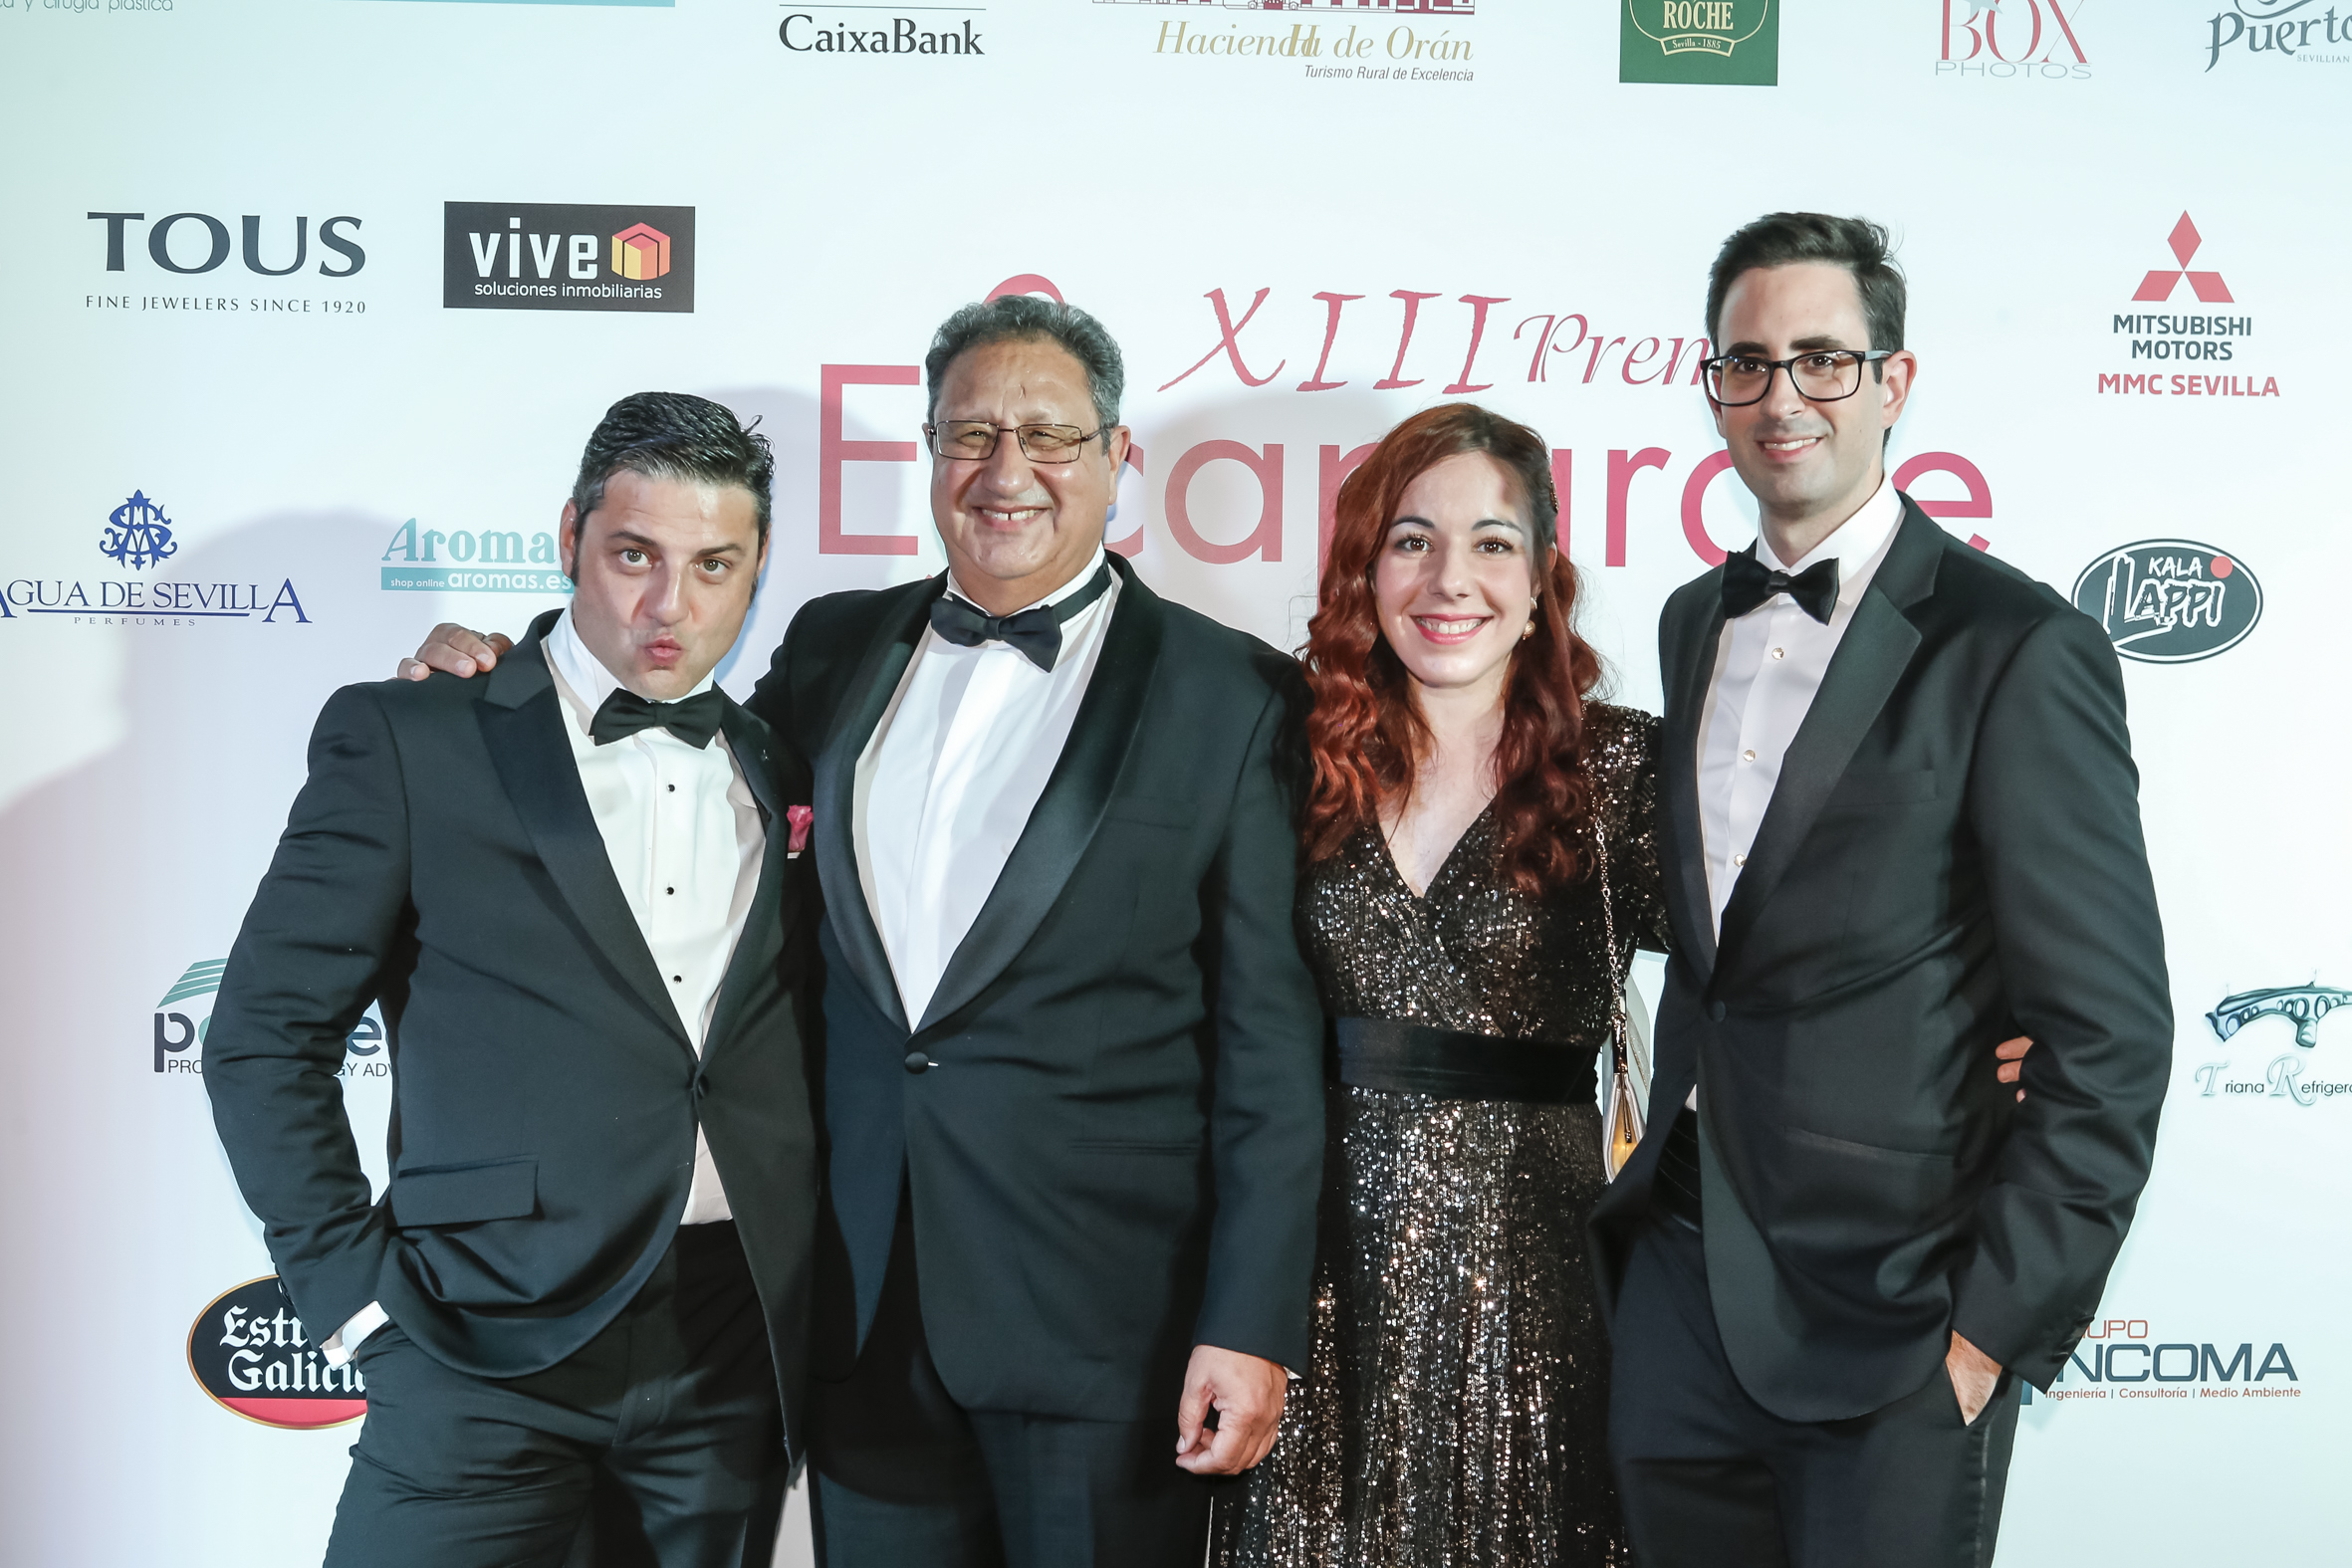 XIII Premios Escaparate Photocall